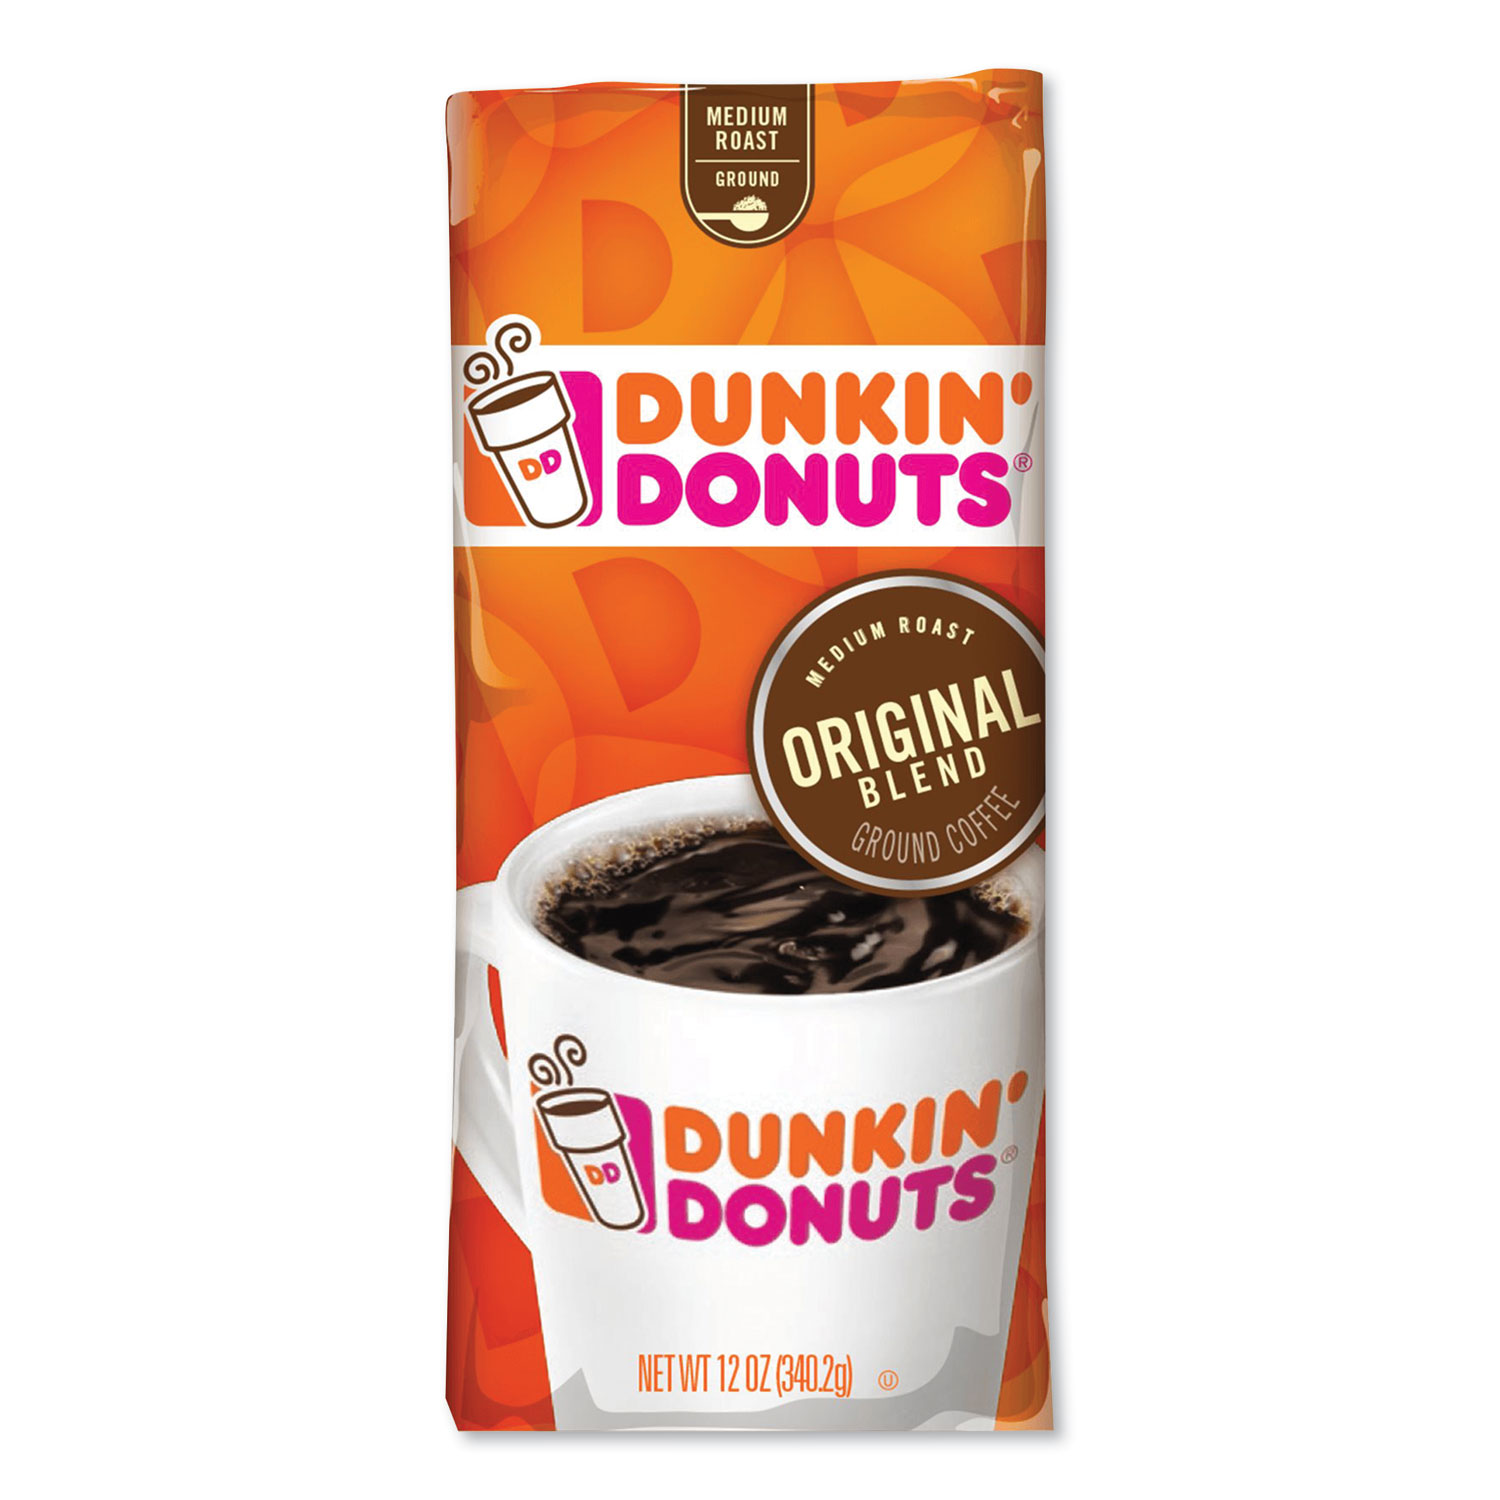  Dunkin Donuts SMU00046 Original Blend Coffee, Dunkin Original, 12 oz Bag (SMU1617987) 